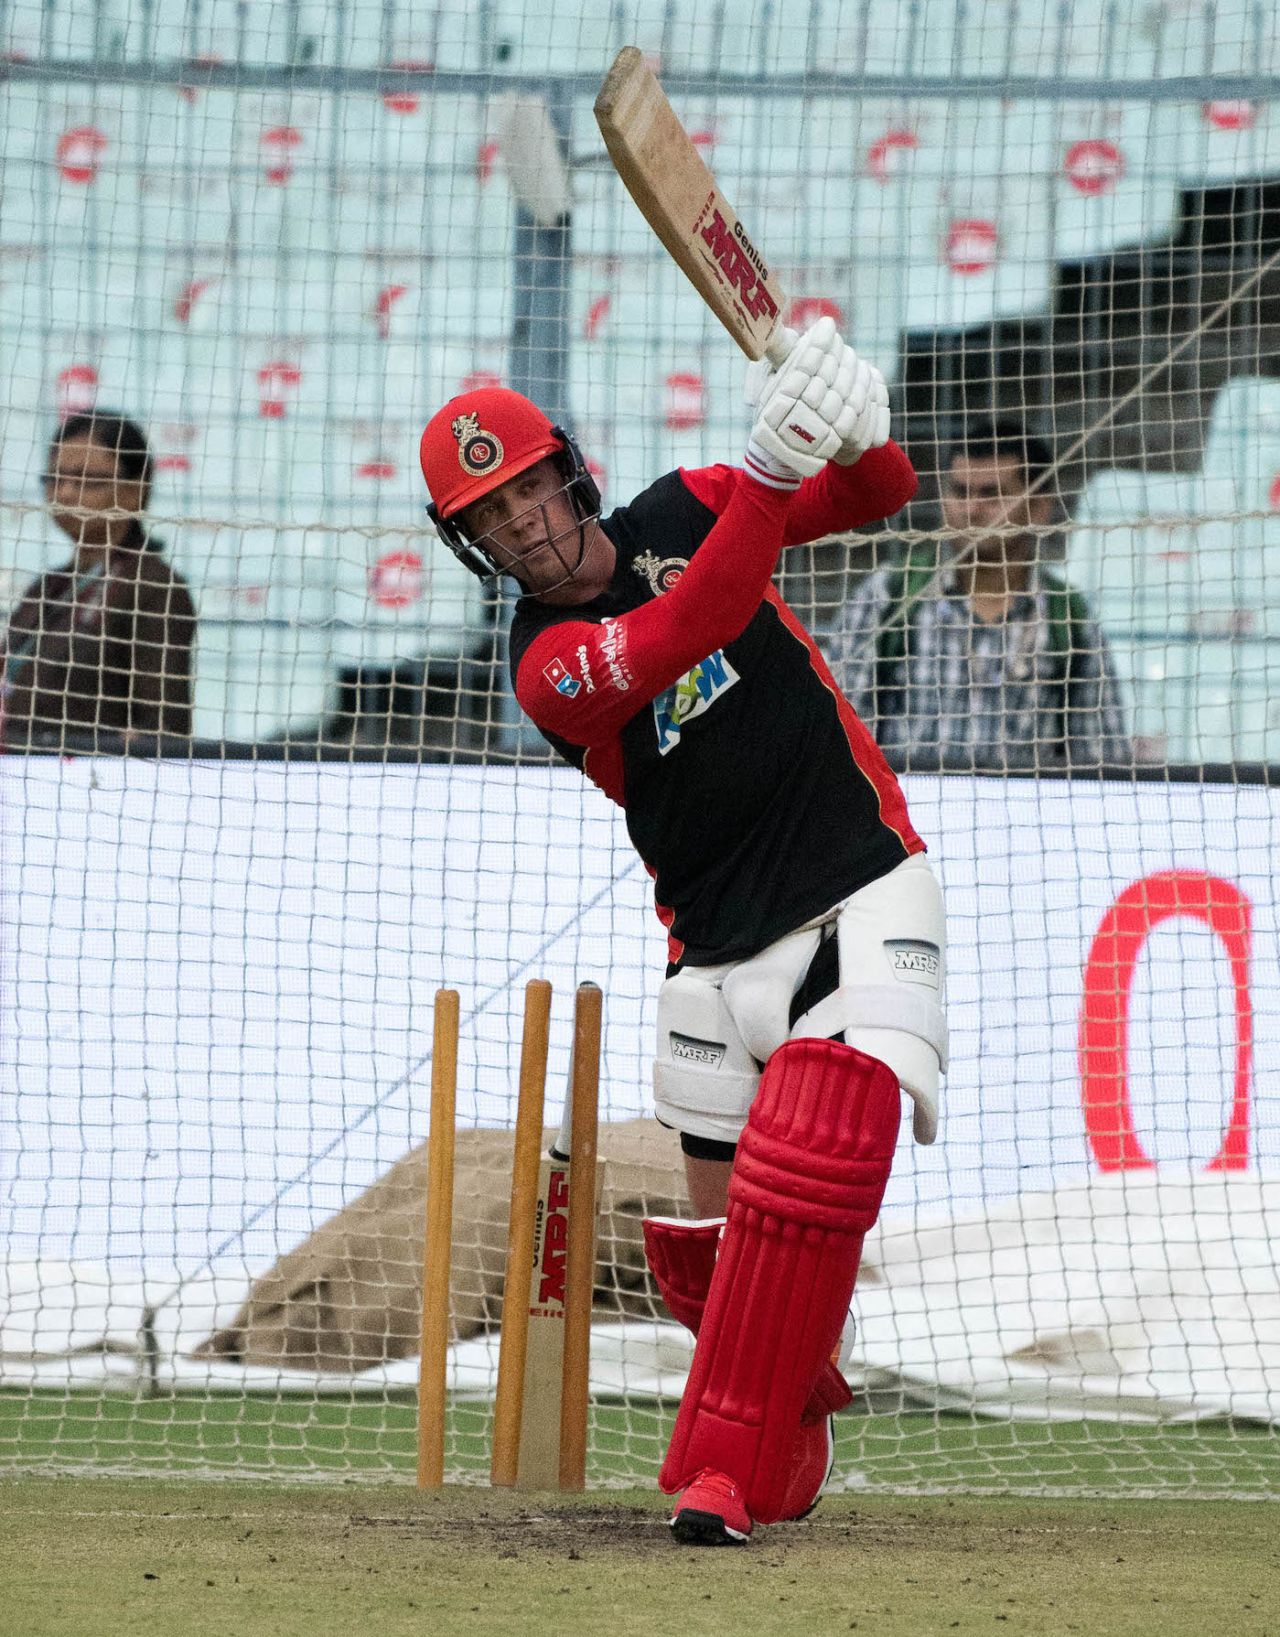 AB de Villiers bats in the nets at Eden Gardens, IPL 2018, Kolkata, April 7, 2018